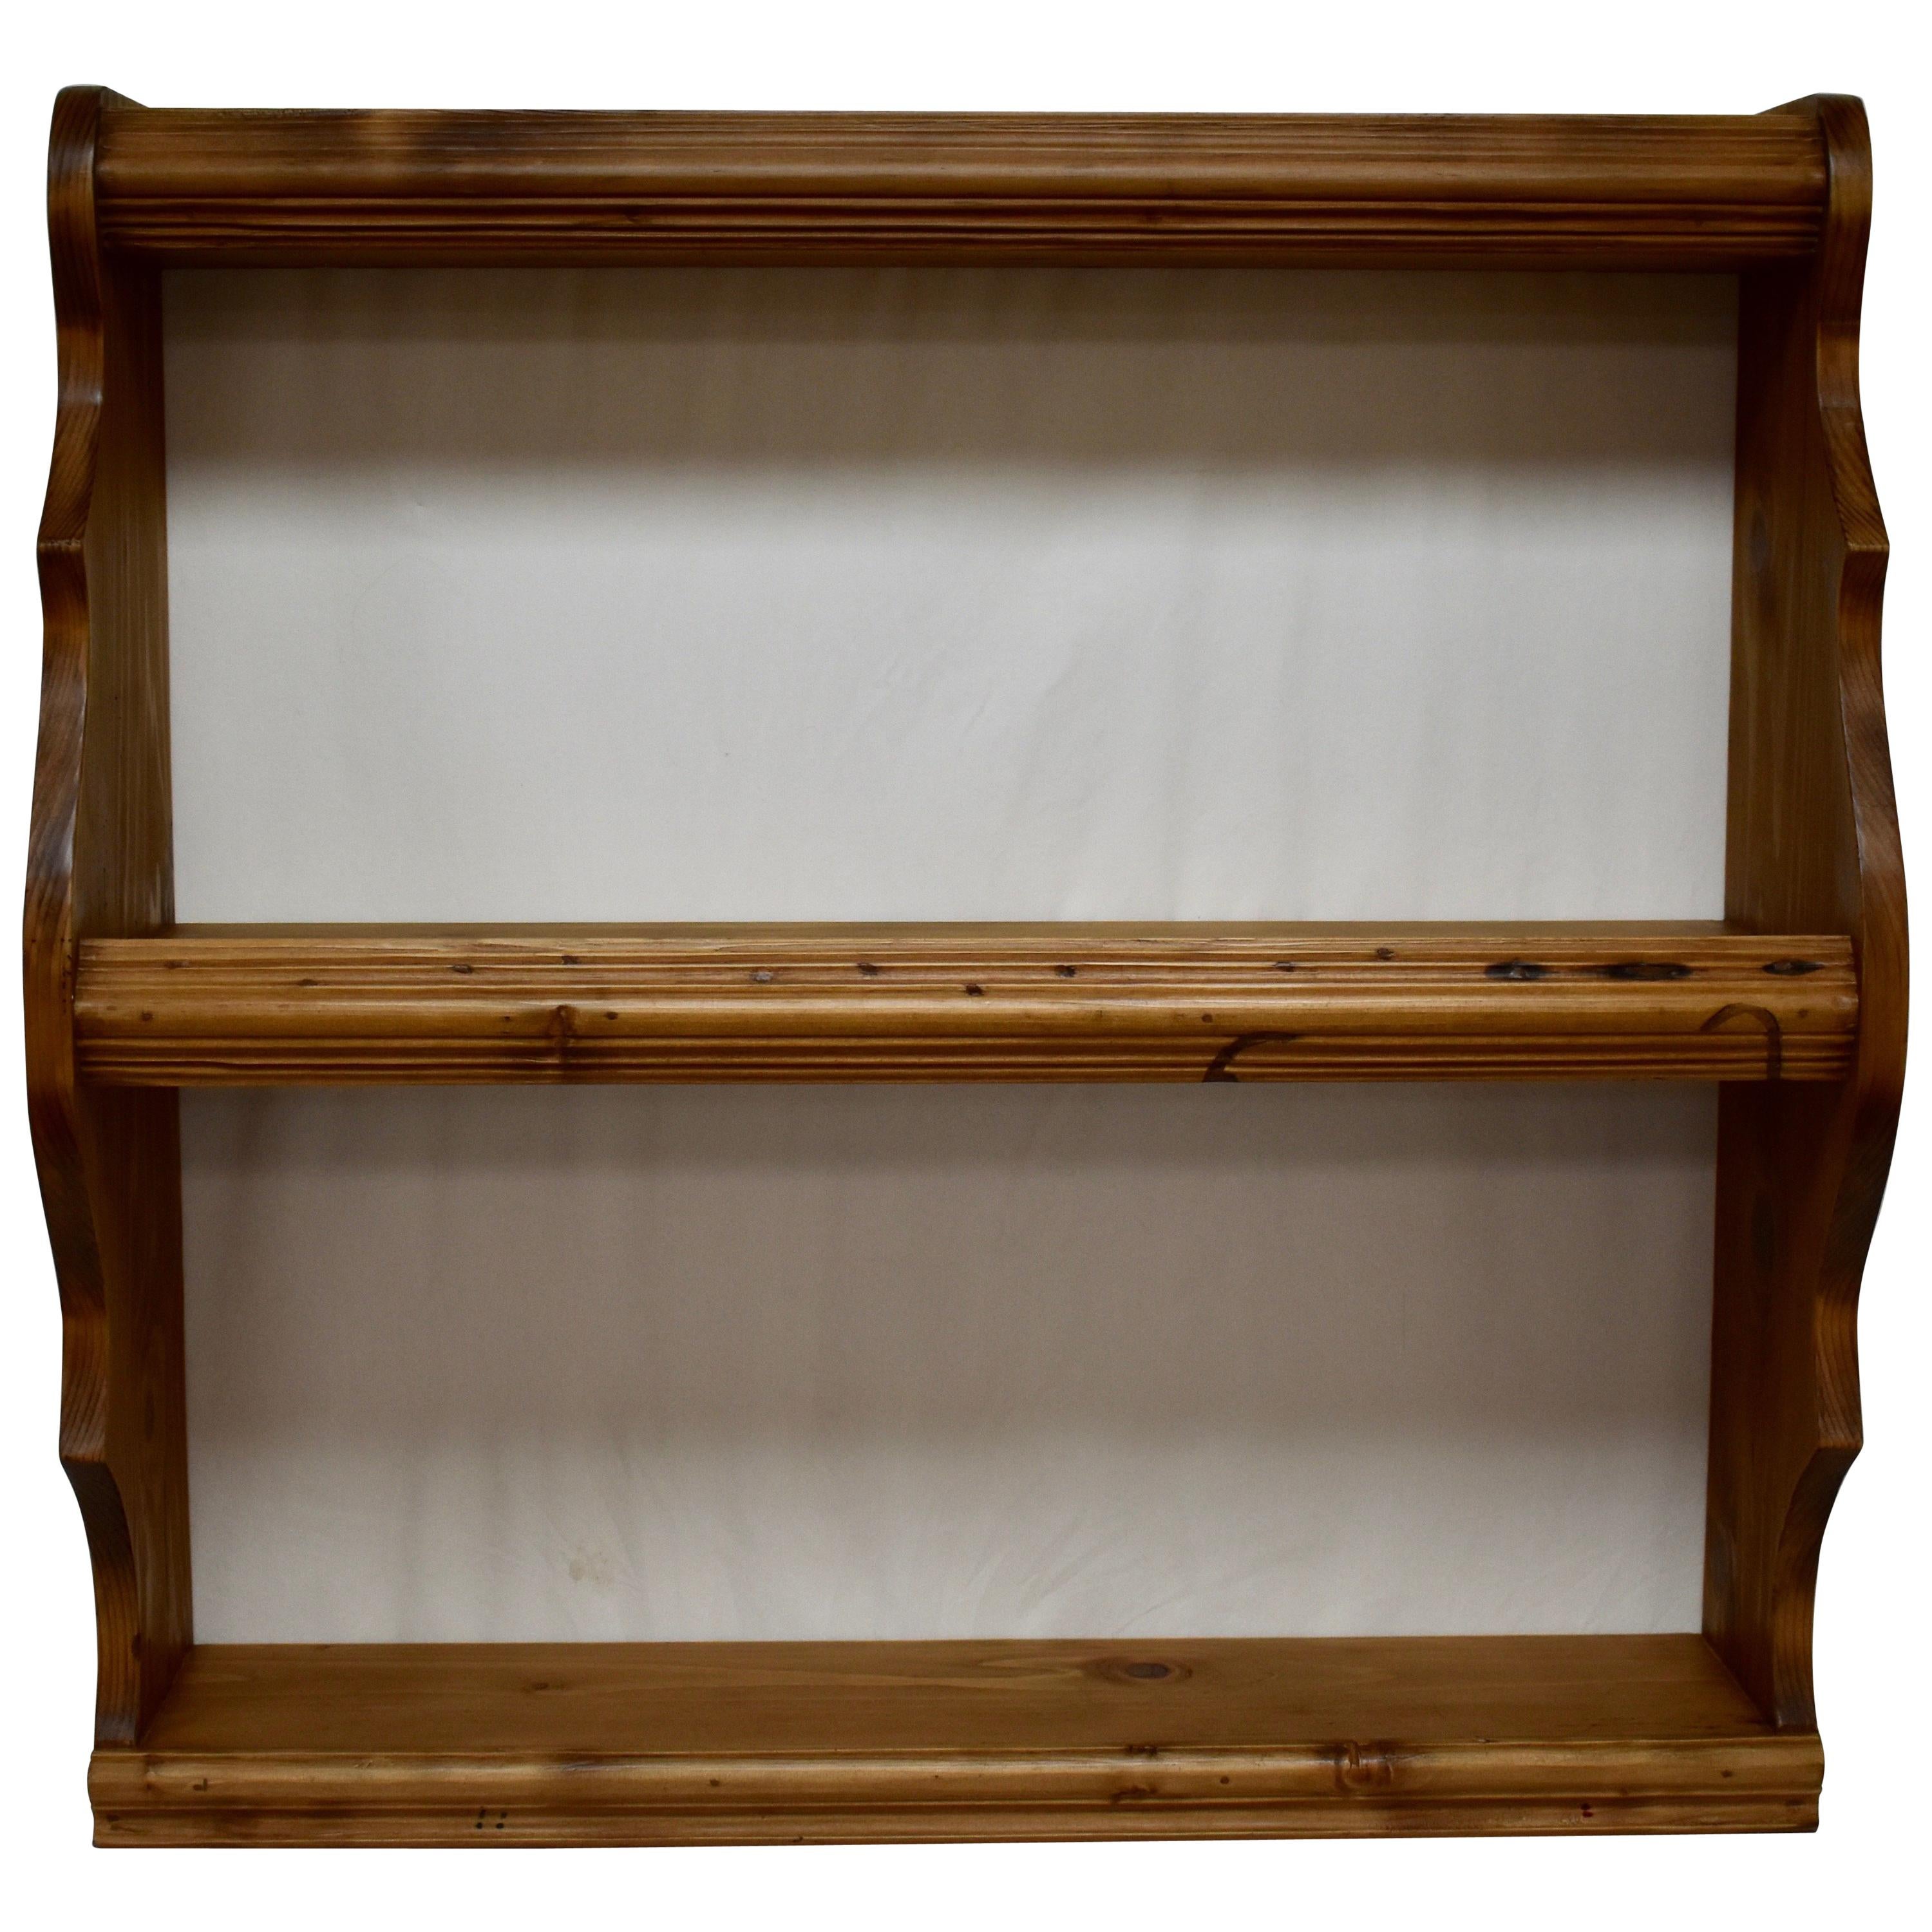 Pine Hanging Shelf or Plate Rack